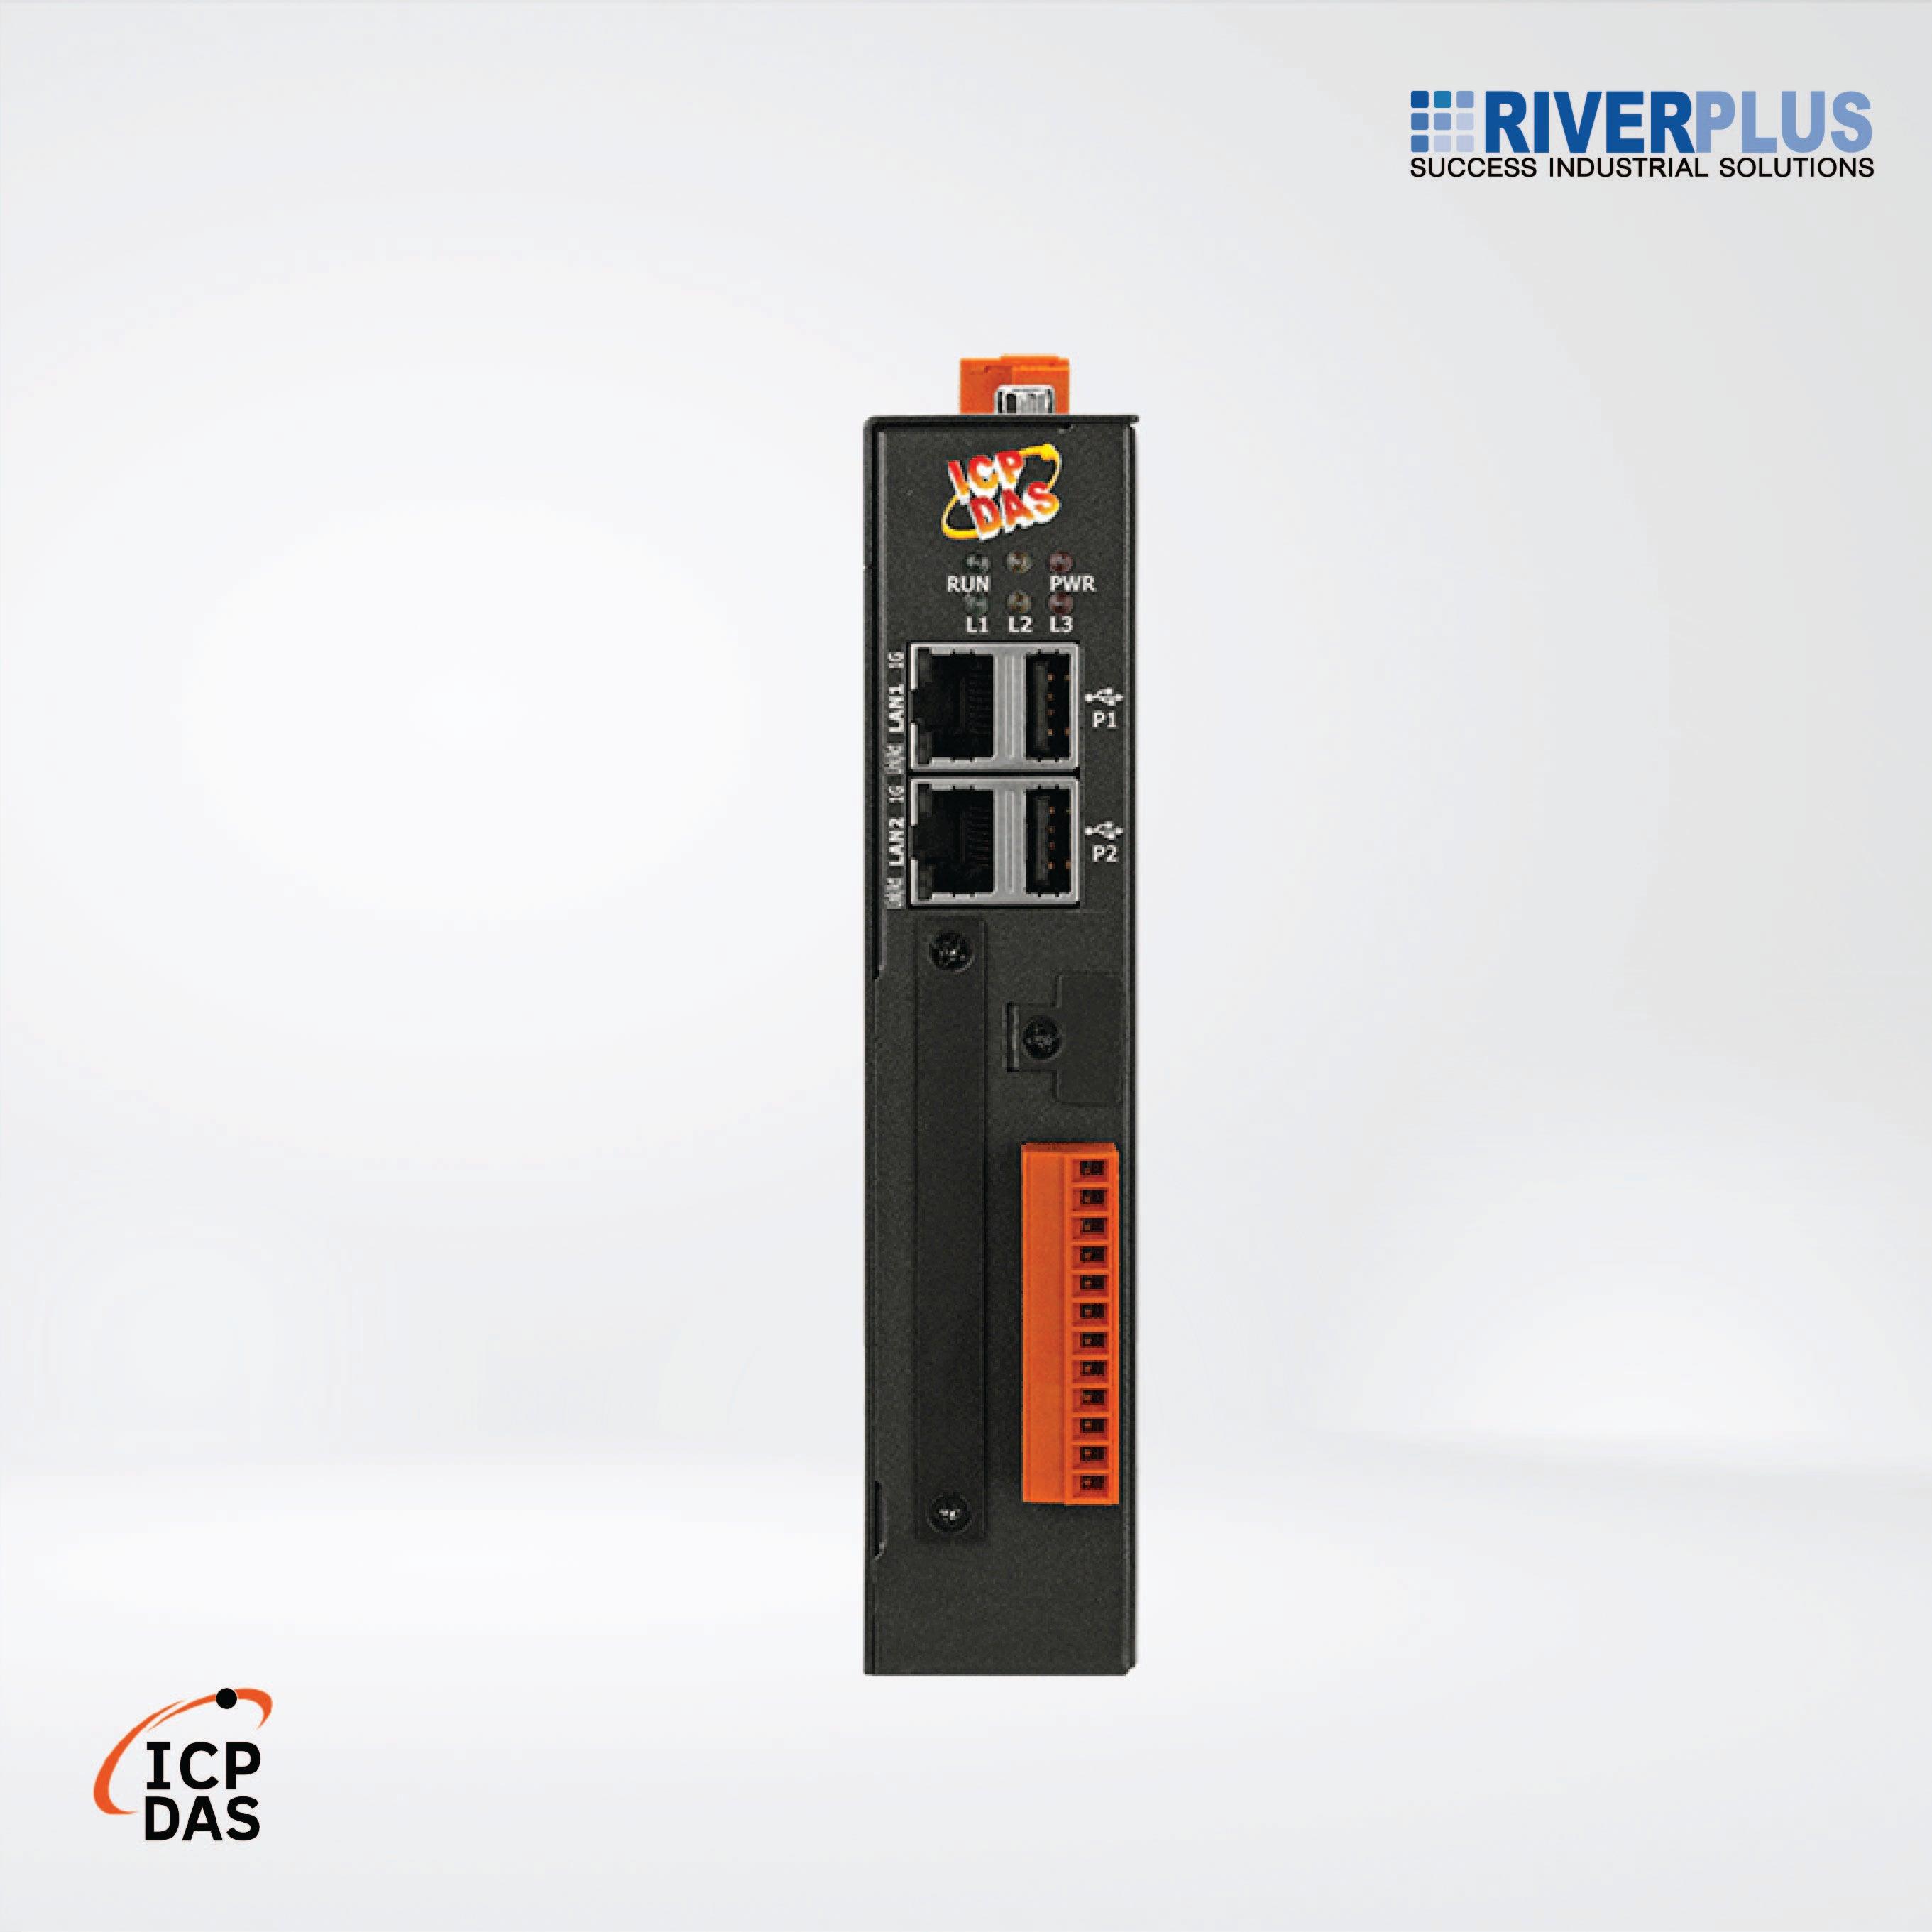 WISE-2241M Intelligent IIoT Edge Controller - Riverplus